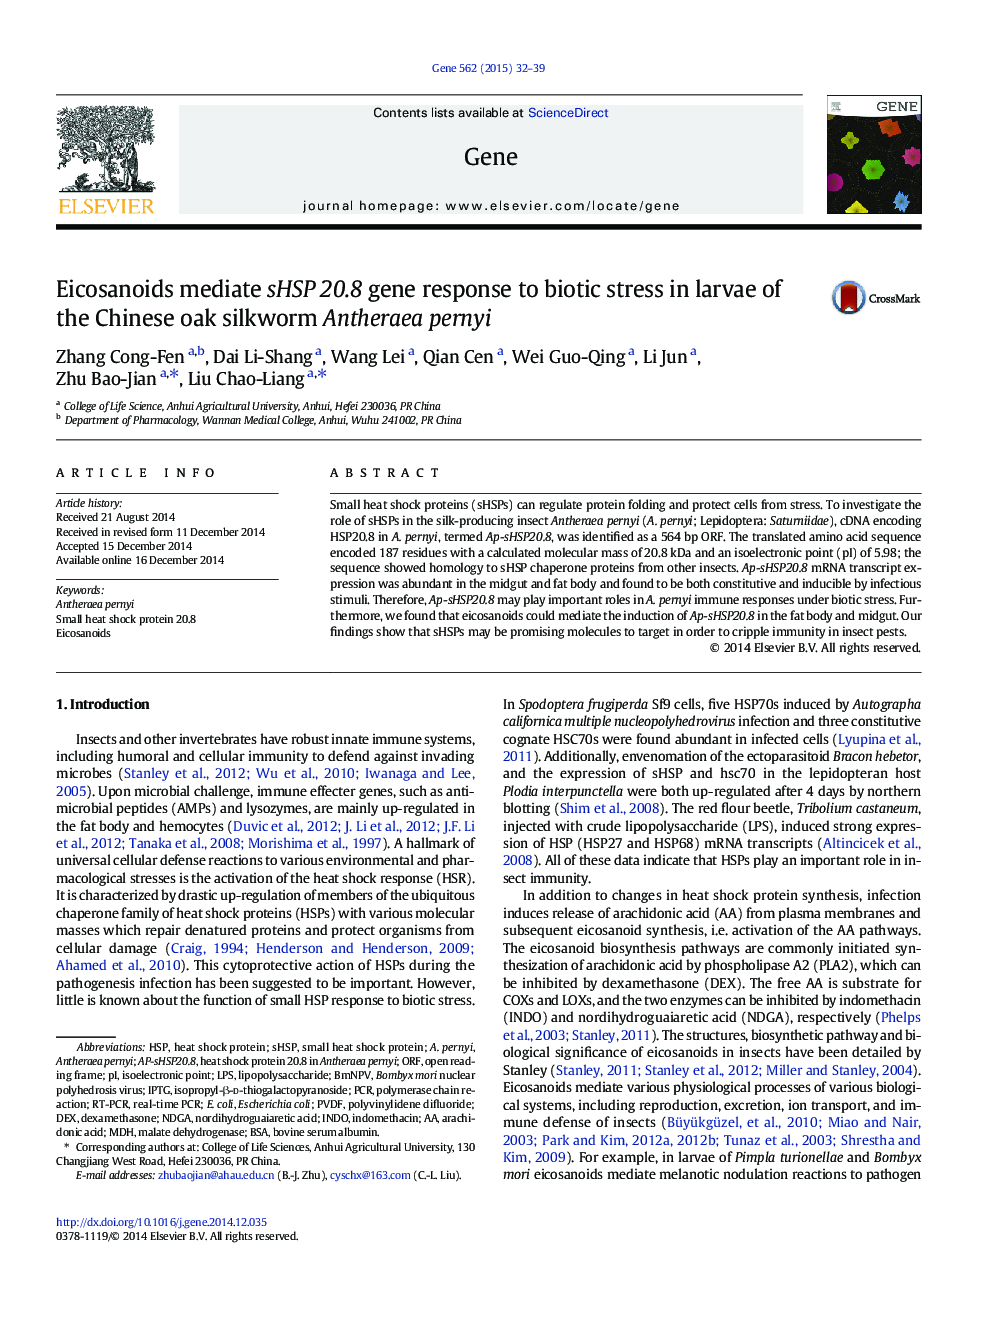 Eicosanoids mediate sHSP 20.8 gene response to biotic stress in larvae of the Chinese oak silkworm Antheraea pernyi